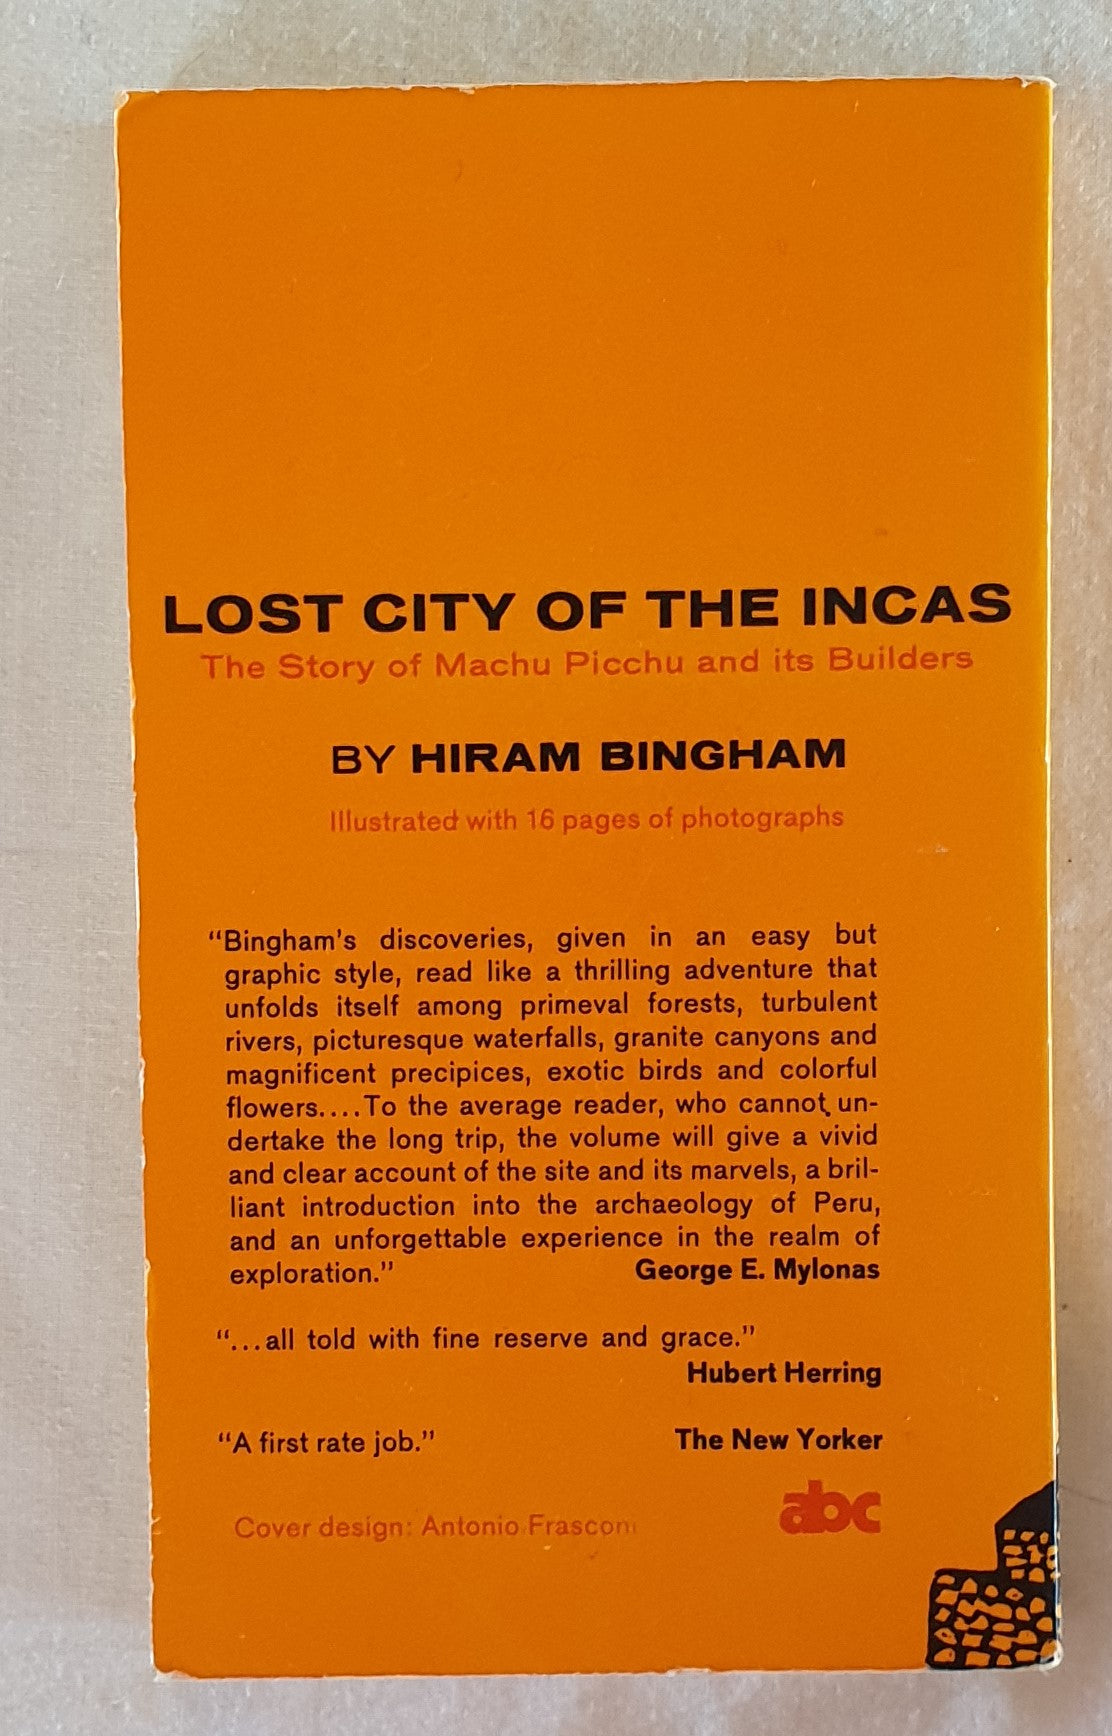 Lost City of the Incas by Hiram Bingham